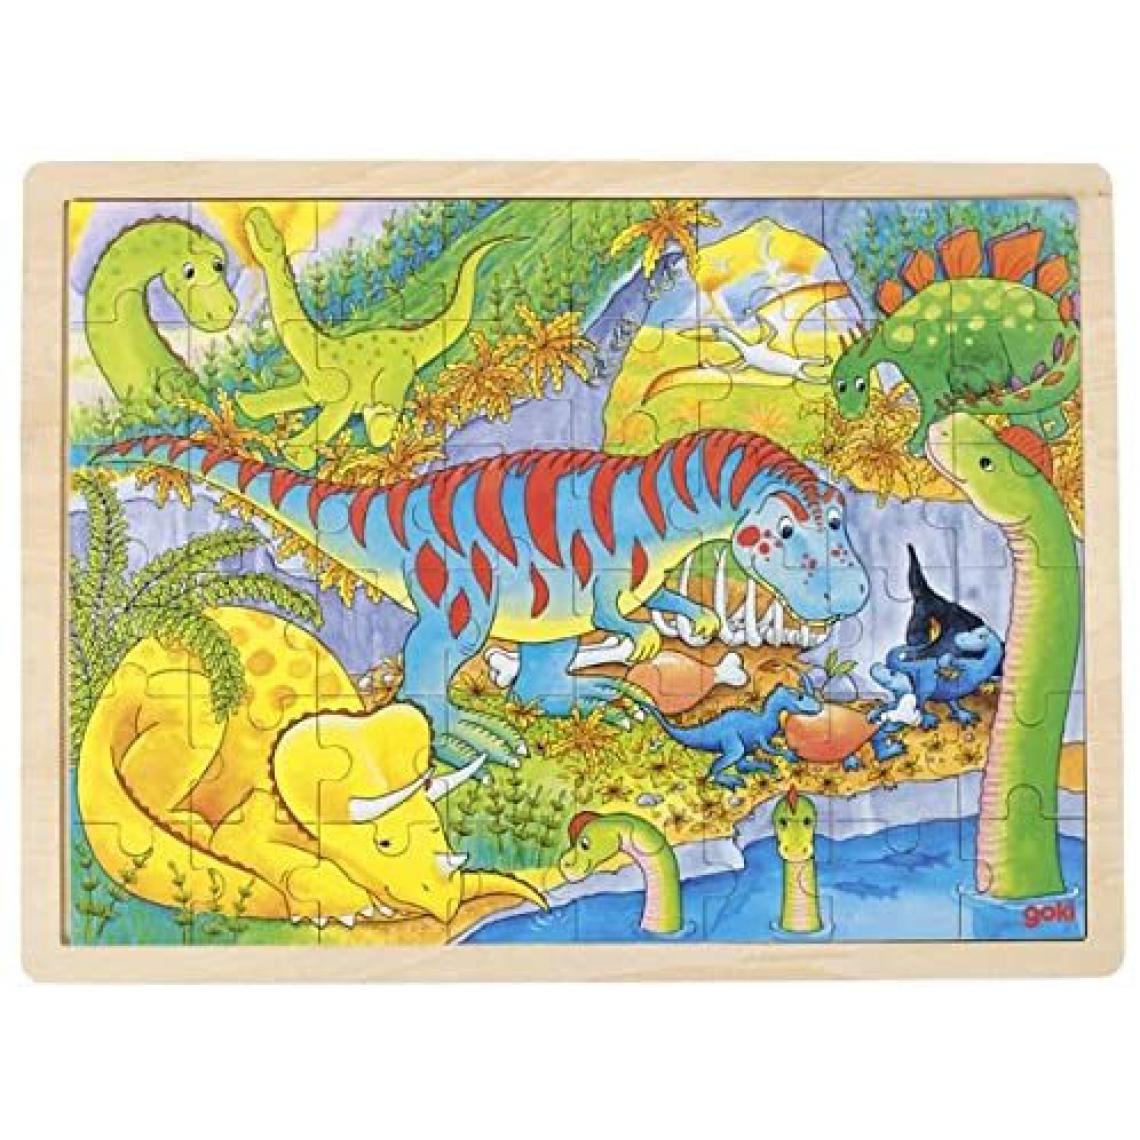 Goki - Goki maderapuzzles de maderagokidinosaurio, Puzzle de, Multicolores 1 - version espagnole - Animaux